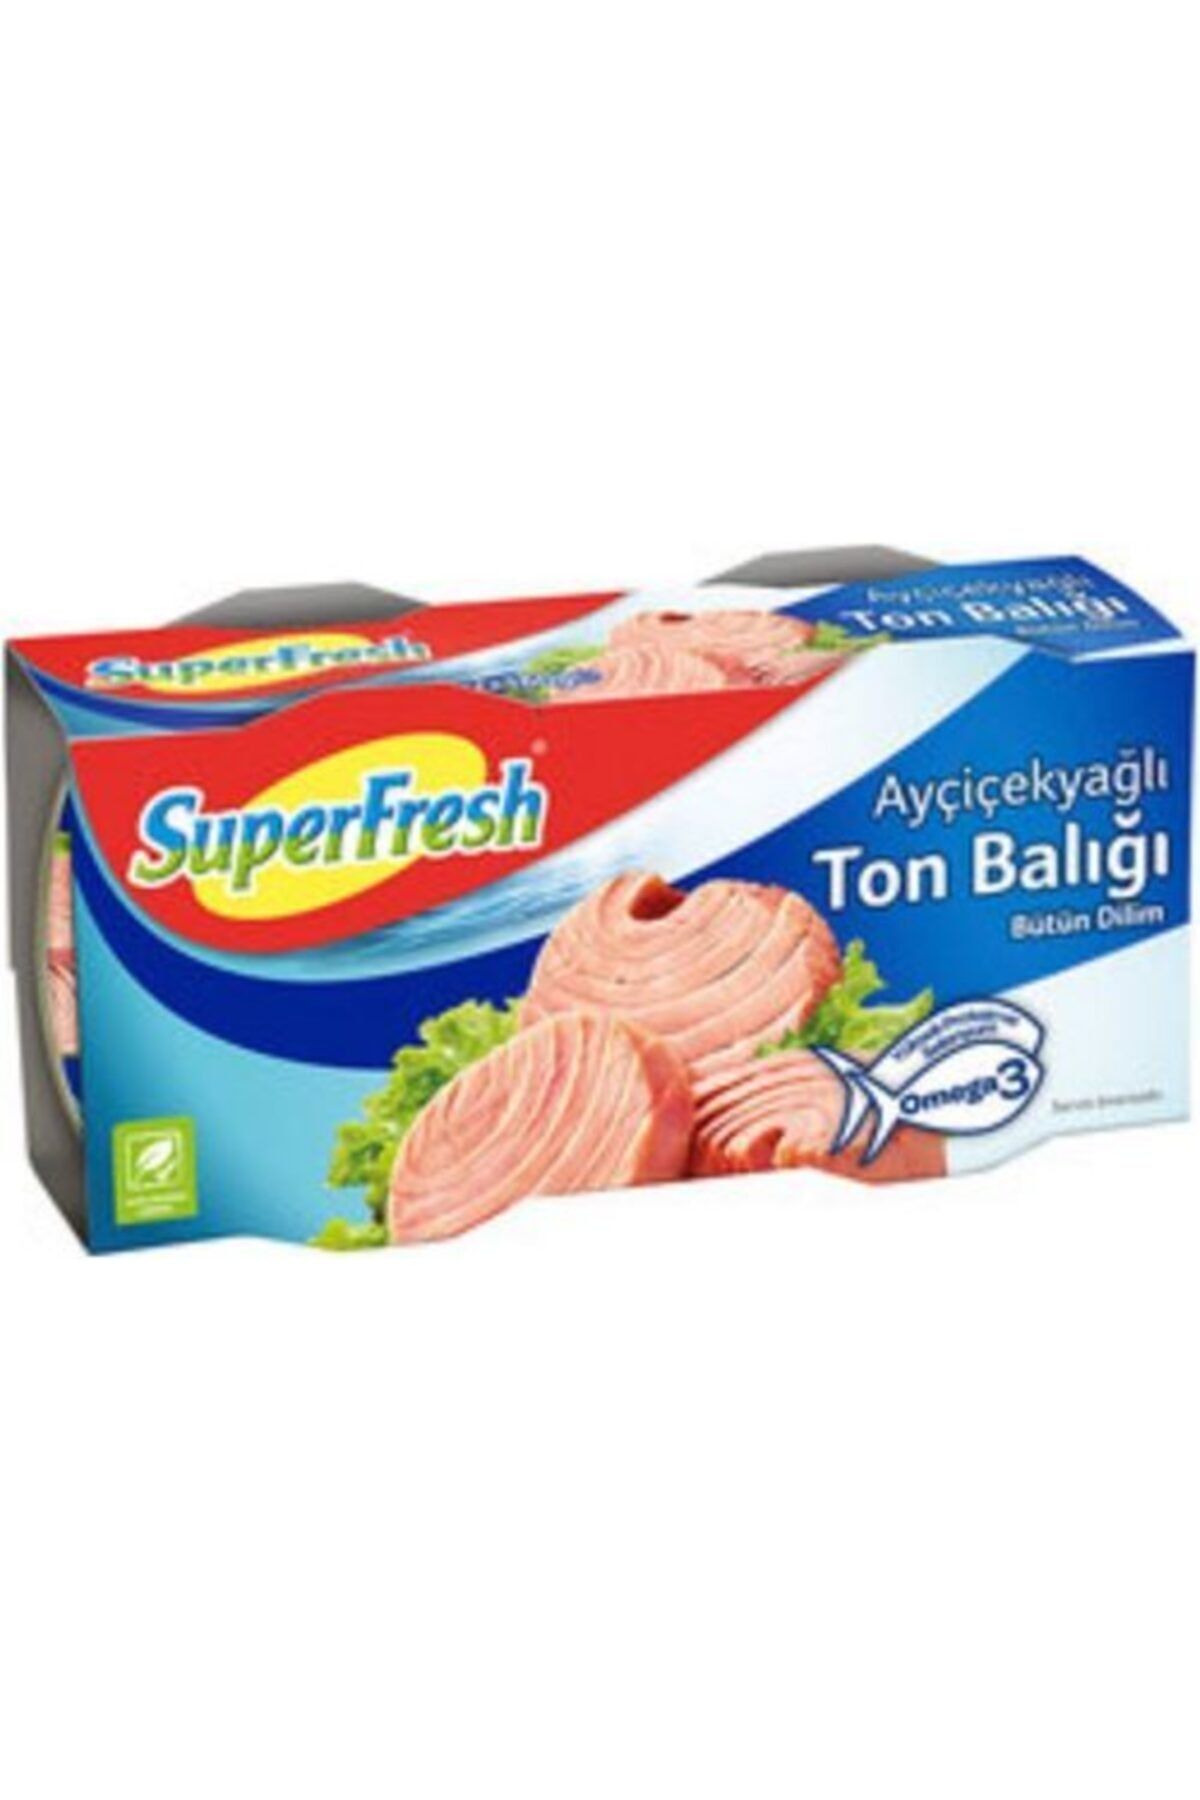 SuperFresh Ton Balığı 2*160gr 5 Paket Ayçiçekyağlı 2 Li 5 Adet